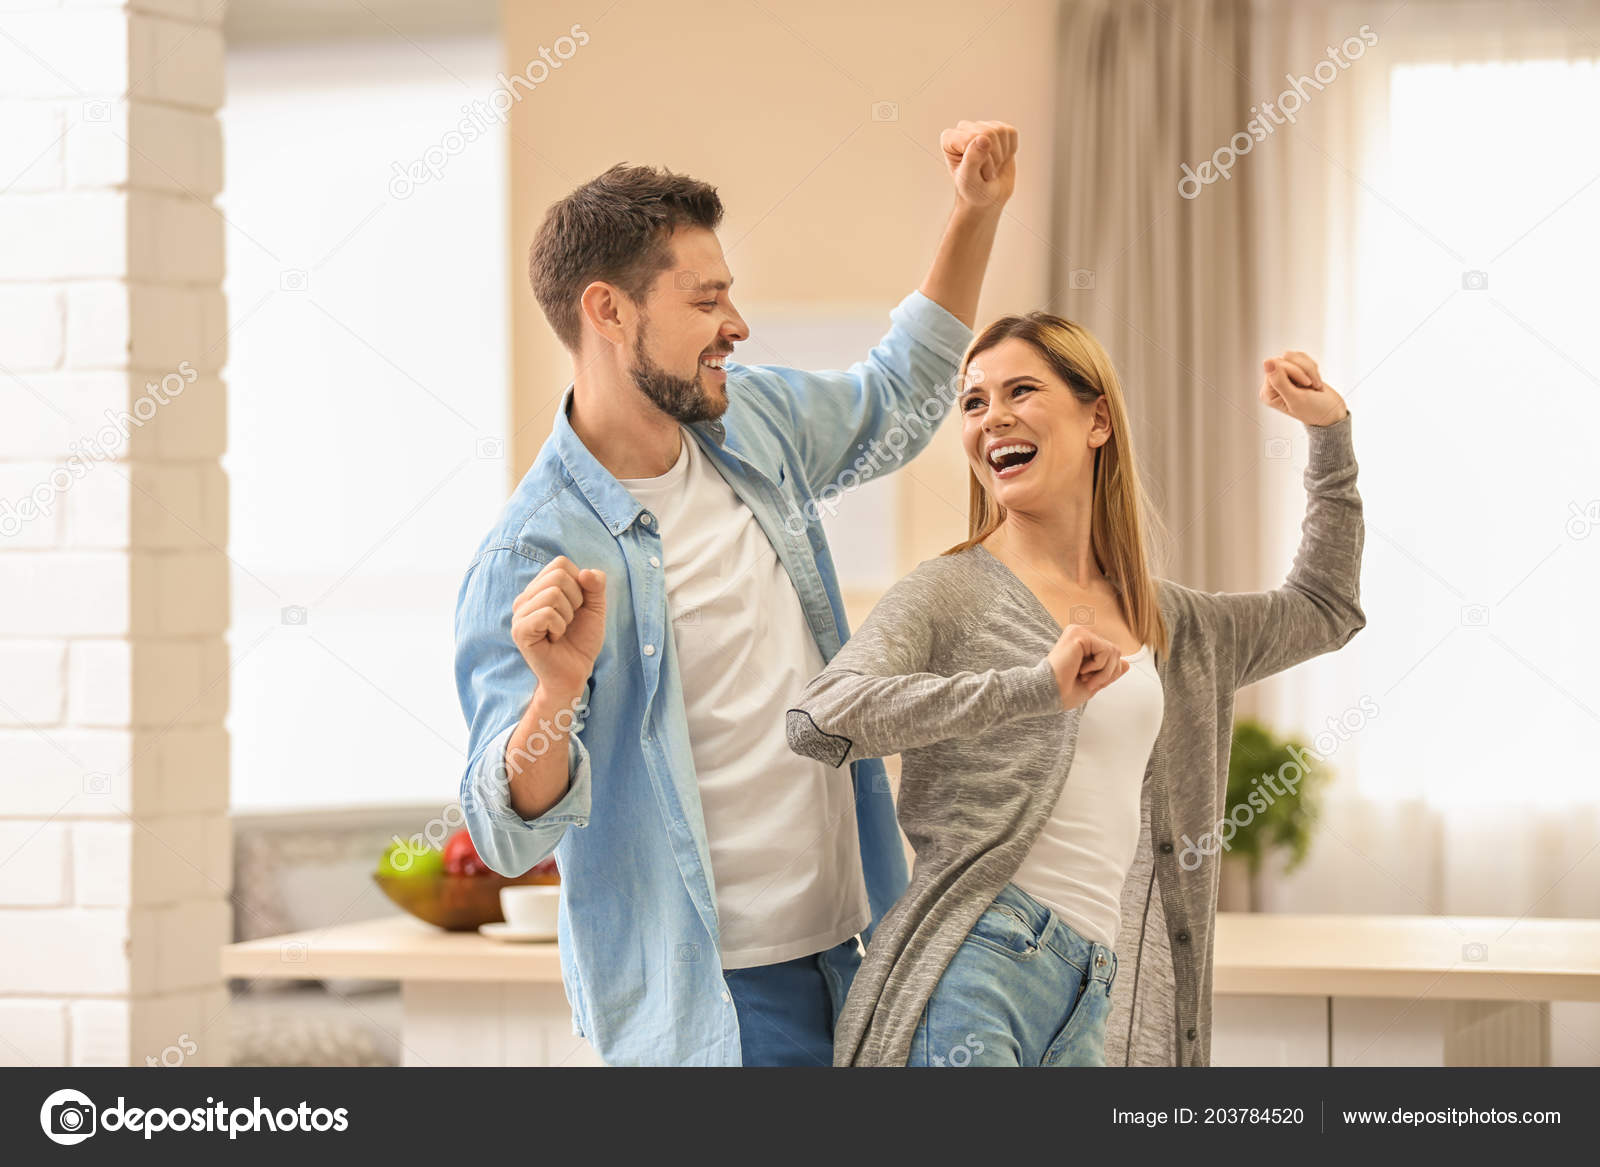 https://st4.depositphotos.com/1177973/20378/i/1600/depositphotos_203784520-stock-photo-happy-couple-dancing-home.jpg